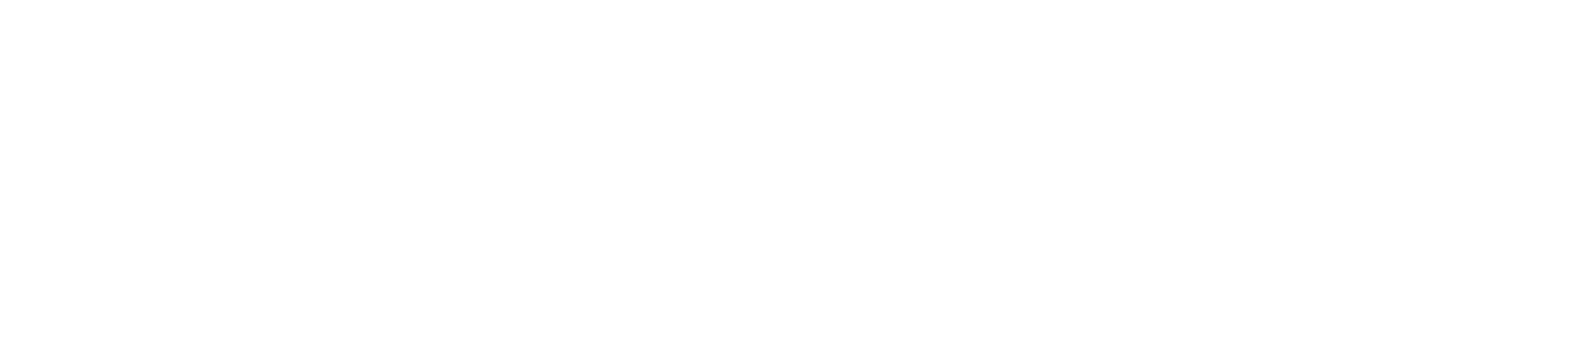 Paycom
 logo large for dark backgrounds (transparent PNG)